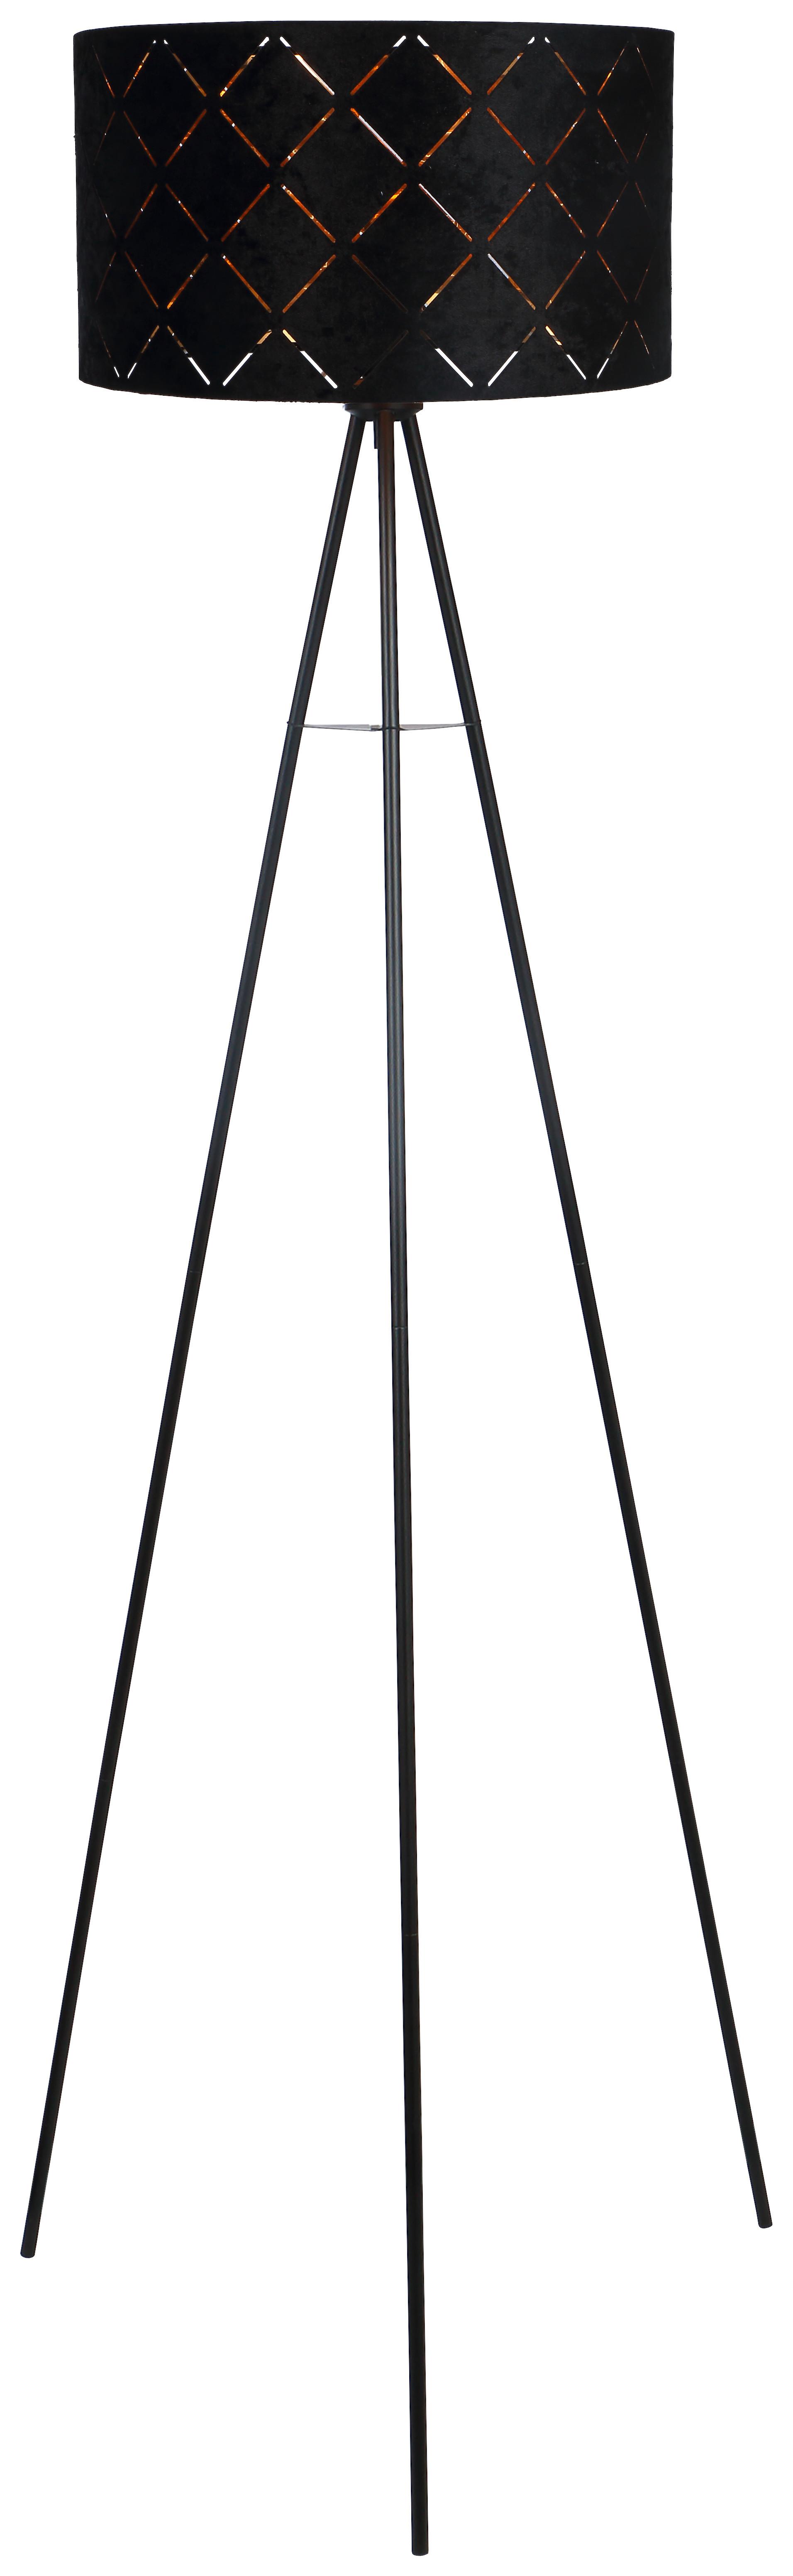 Stojací Lampa Evelyn V: 149cm, 40 Watt - černá, Lifestyle, kov (149cm) - Modern Living